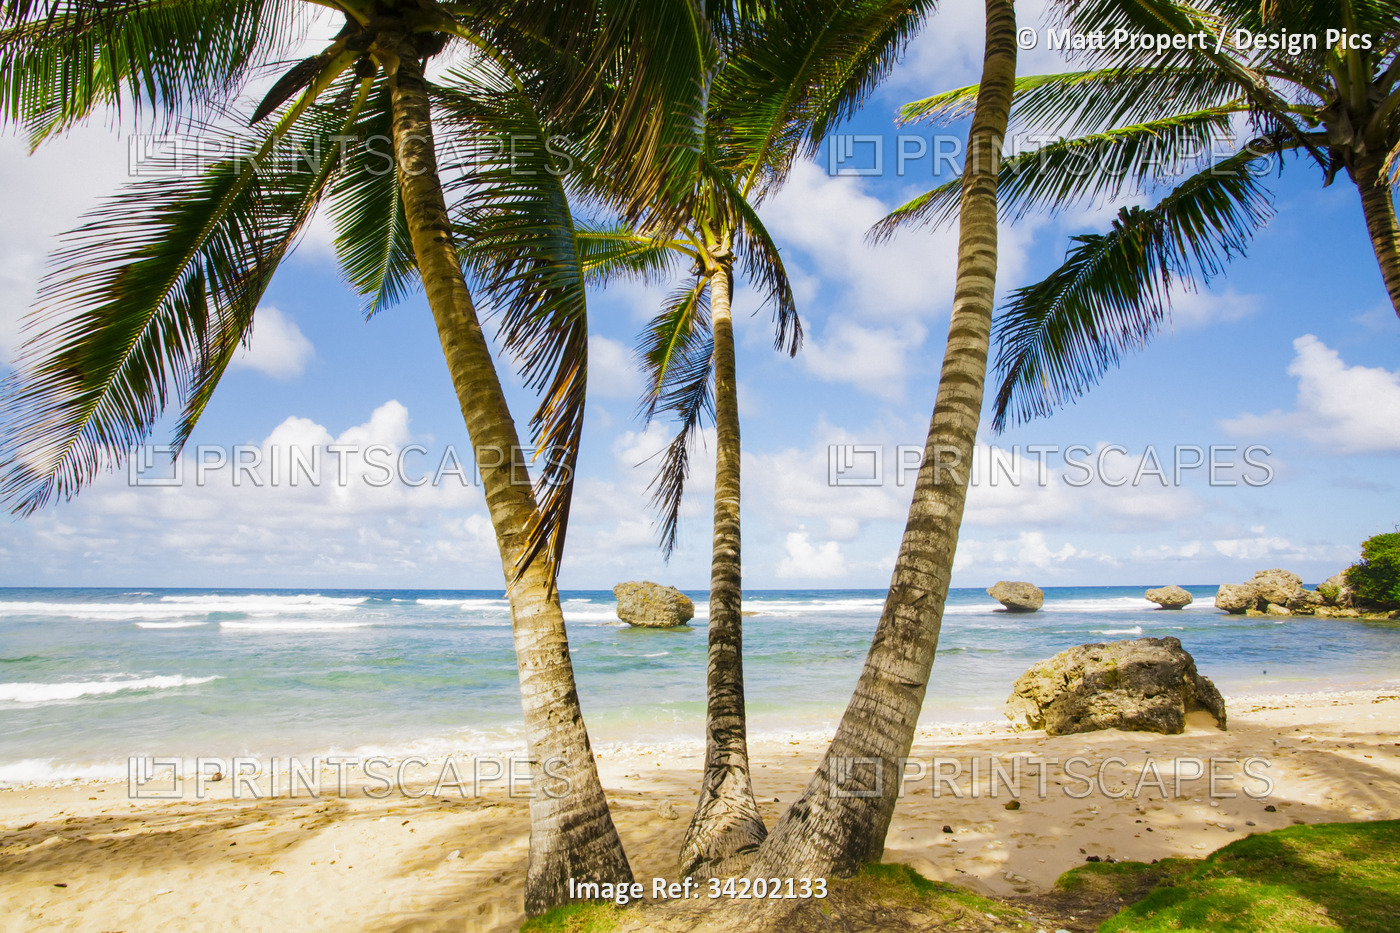 Palm trees line a beach in Barbados; Bathsheba, Barbados